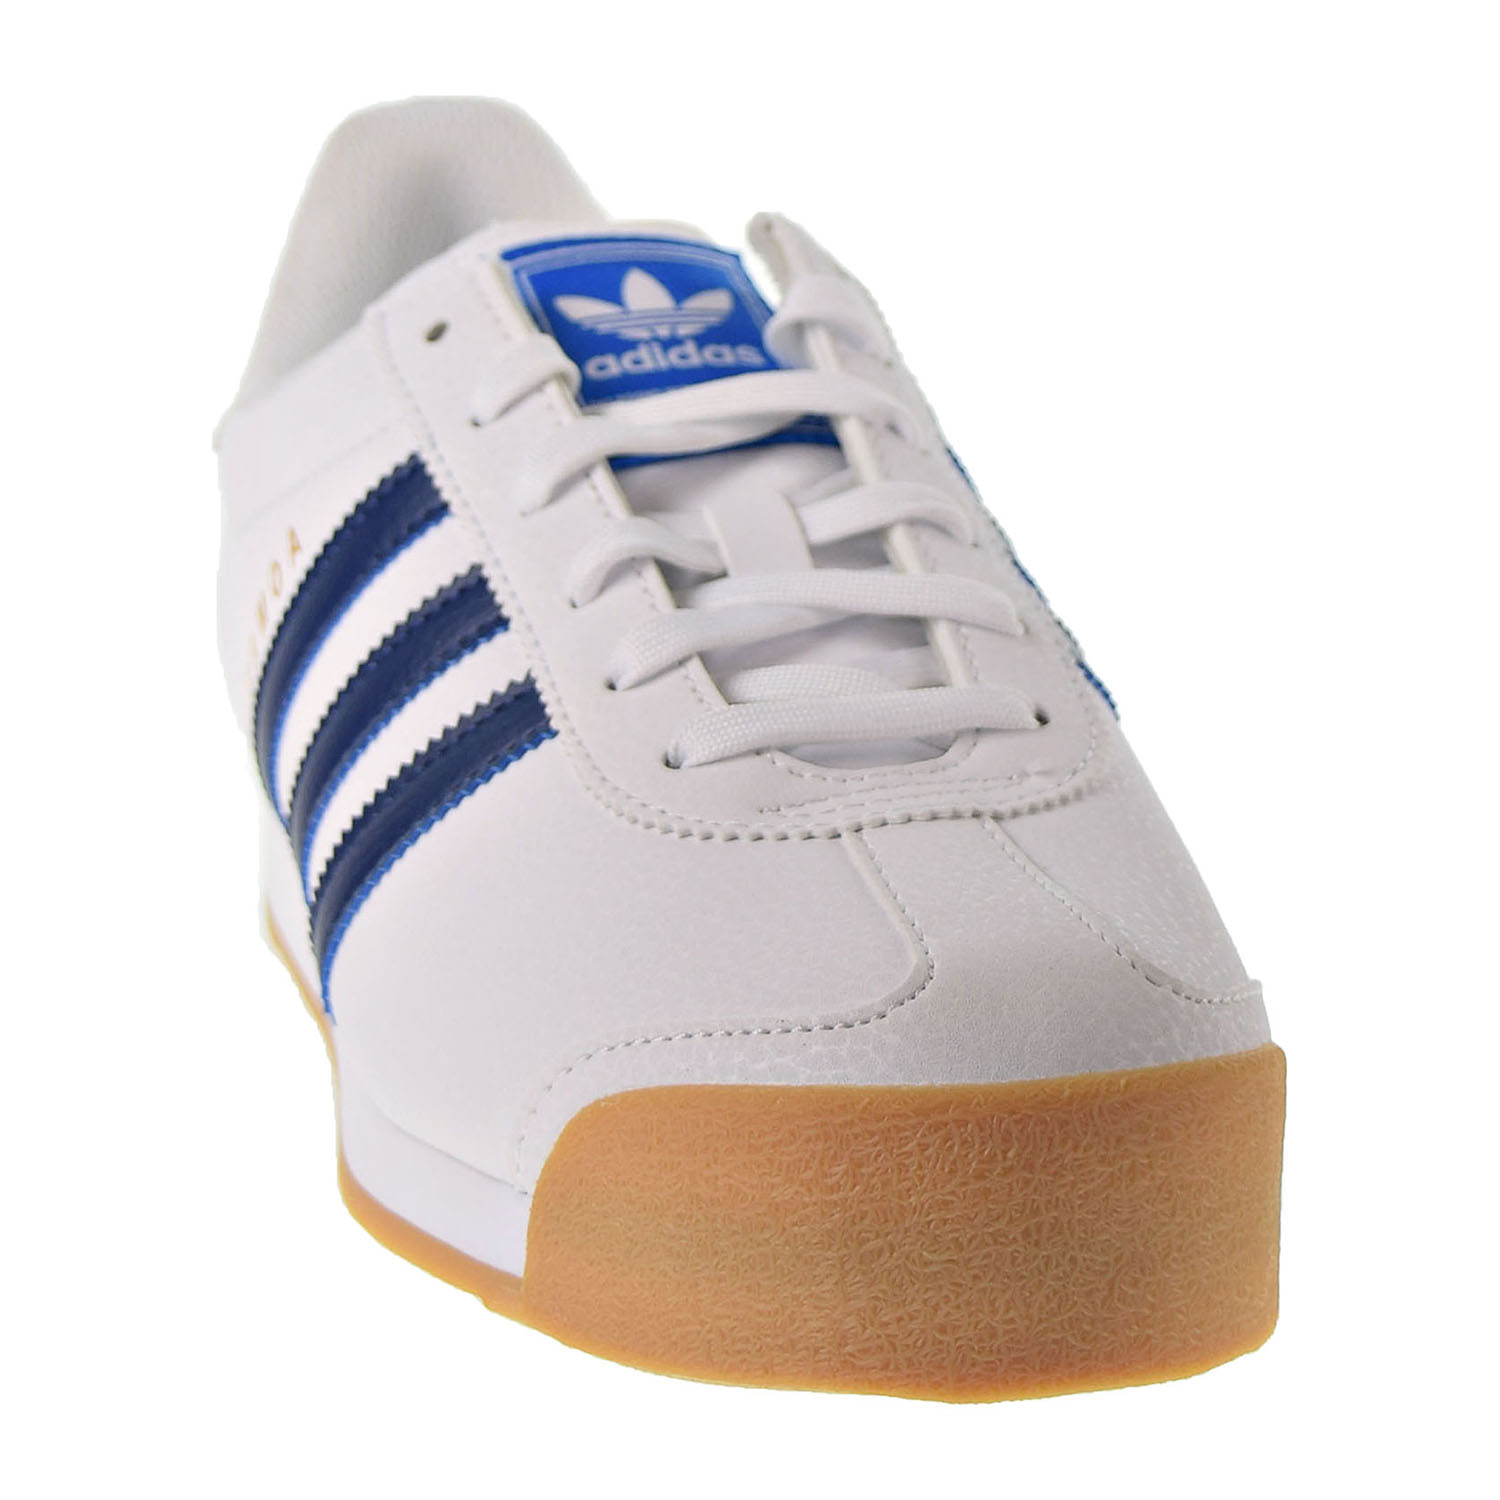 Adidas Samoa Men's Shoes Cloud White-Tech Indigo-Gum eg6088